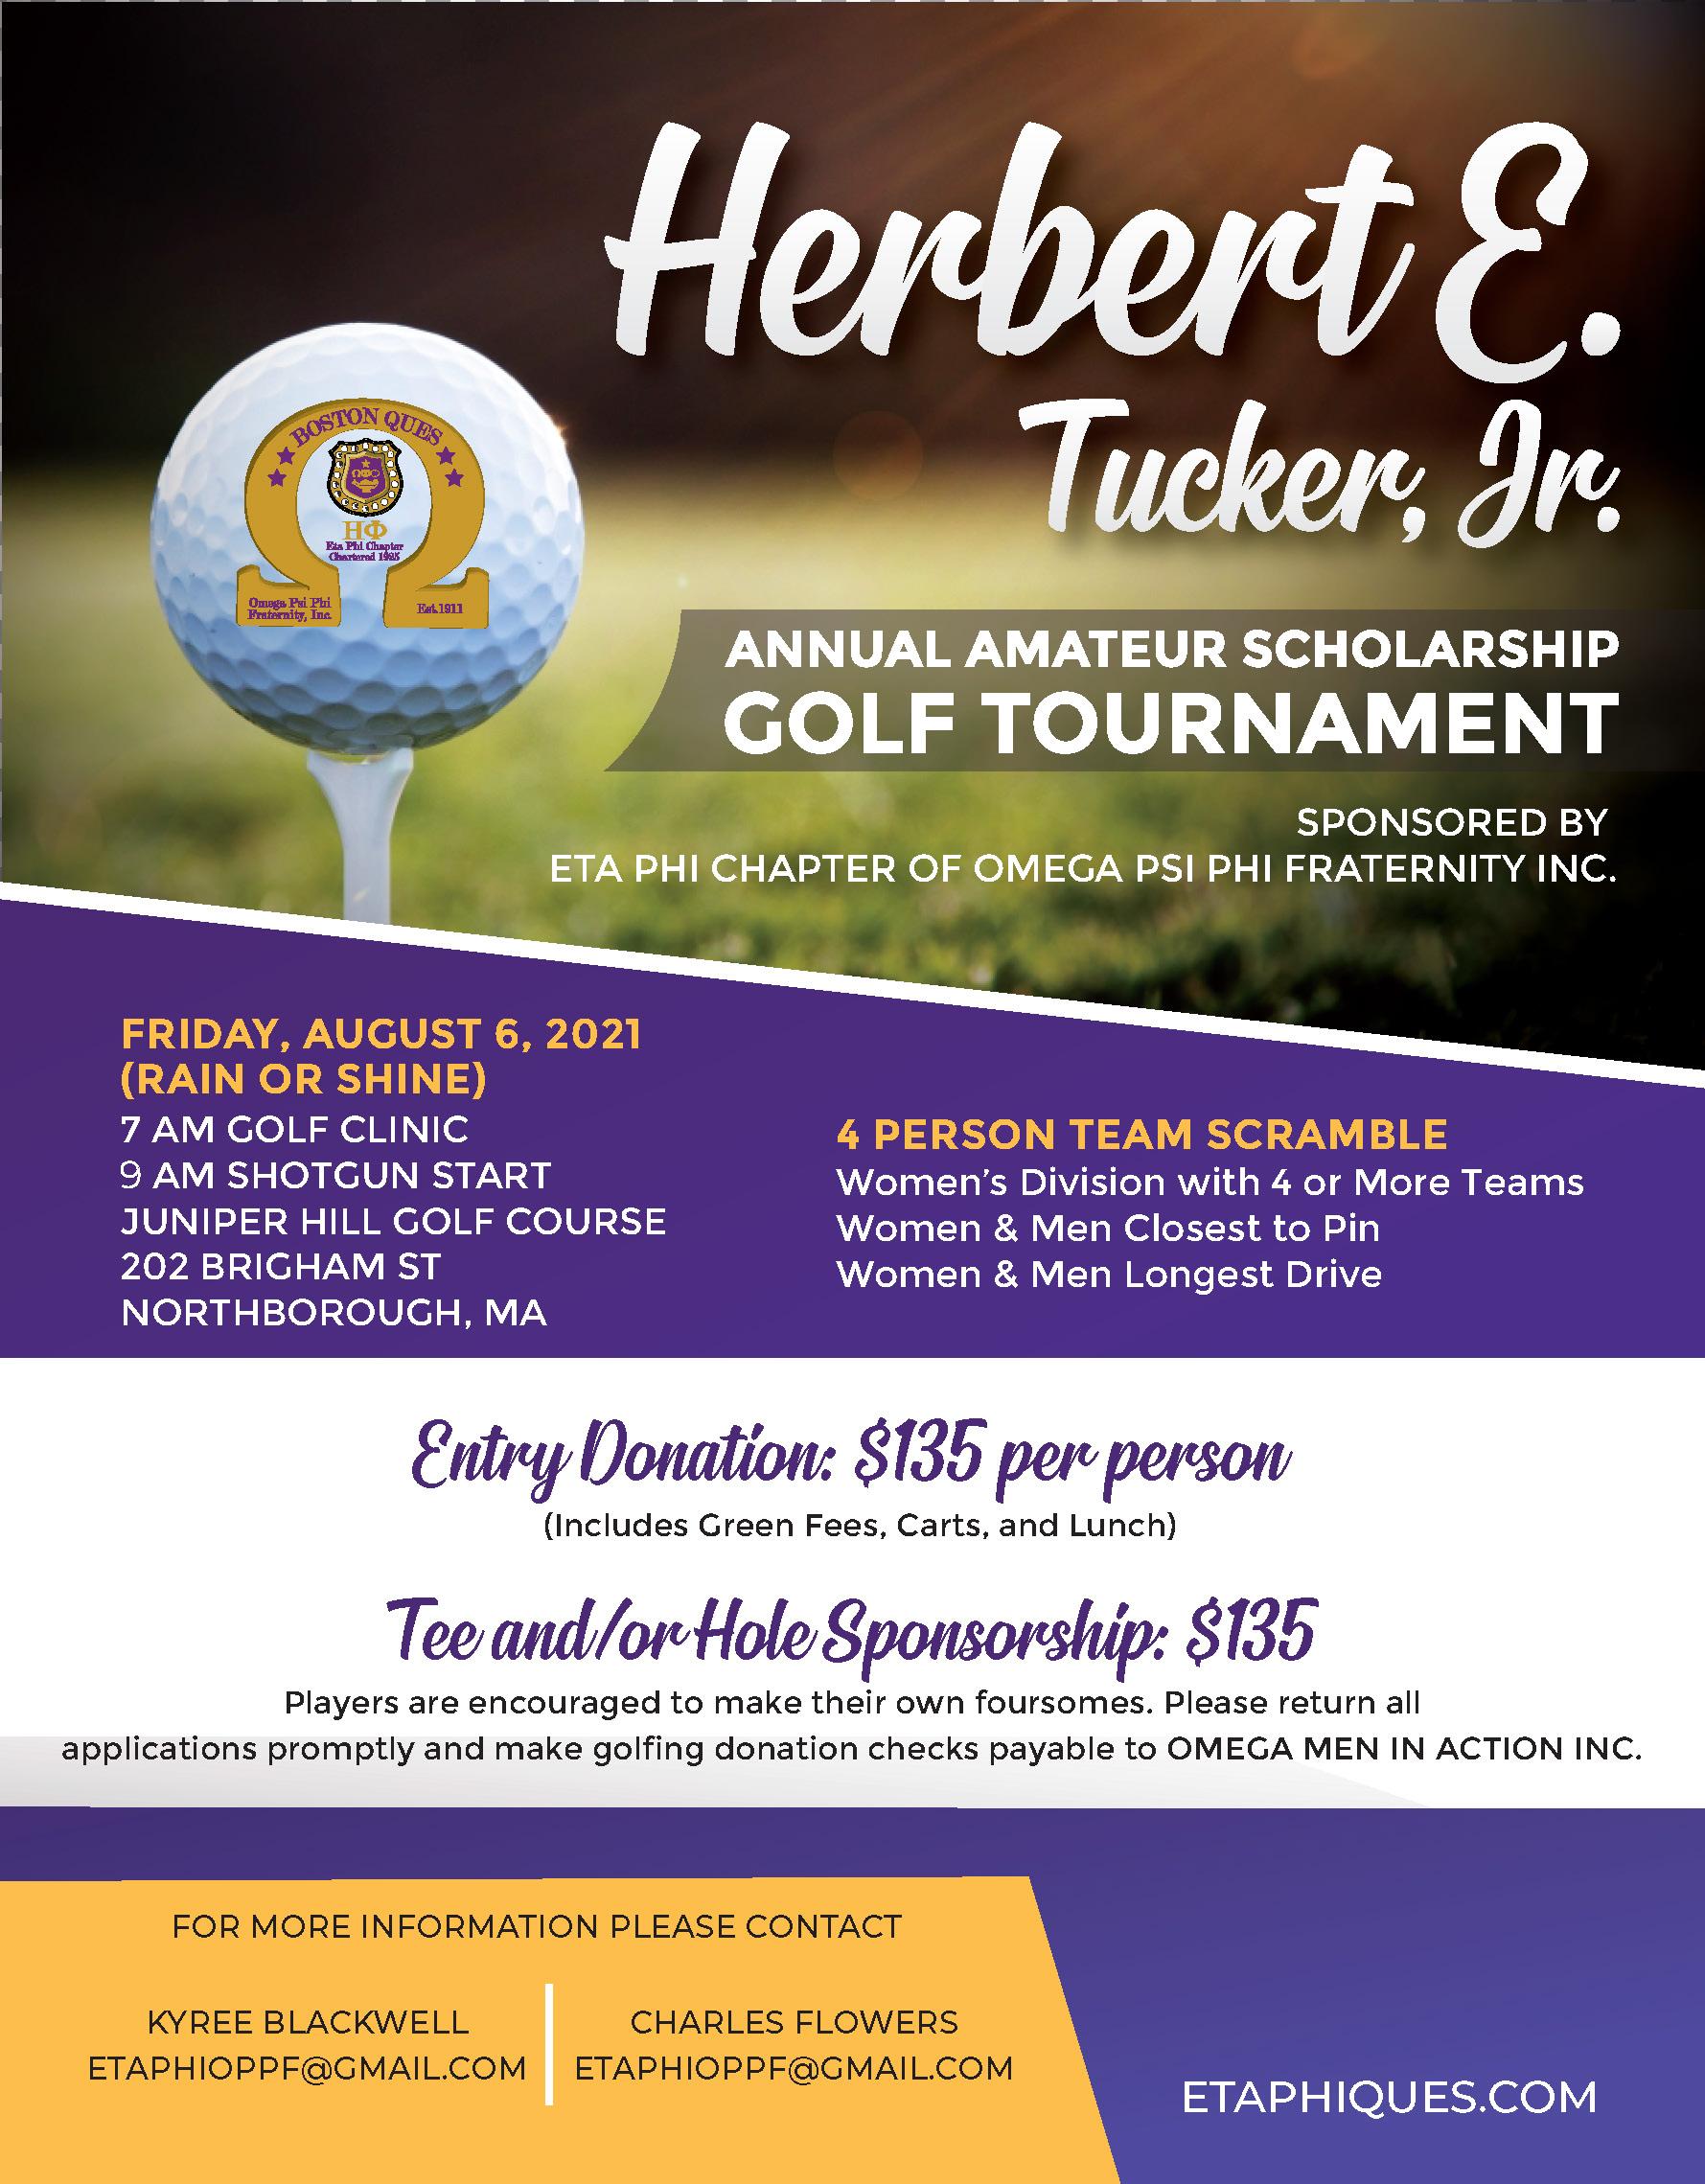 Herbert E. Tucker Jr. Annual Amateur Scholarship Golf Tournament